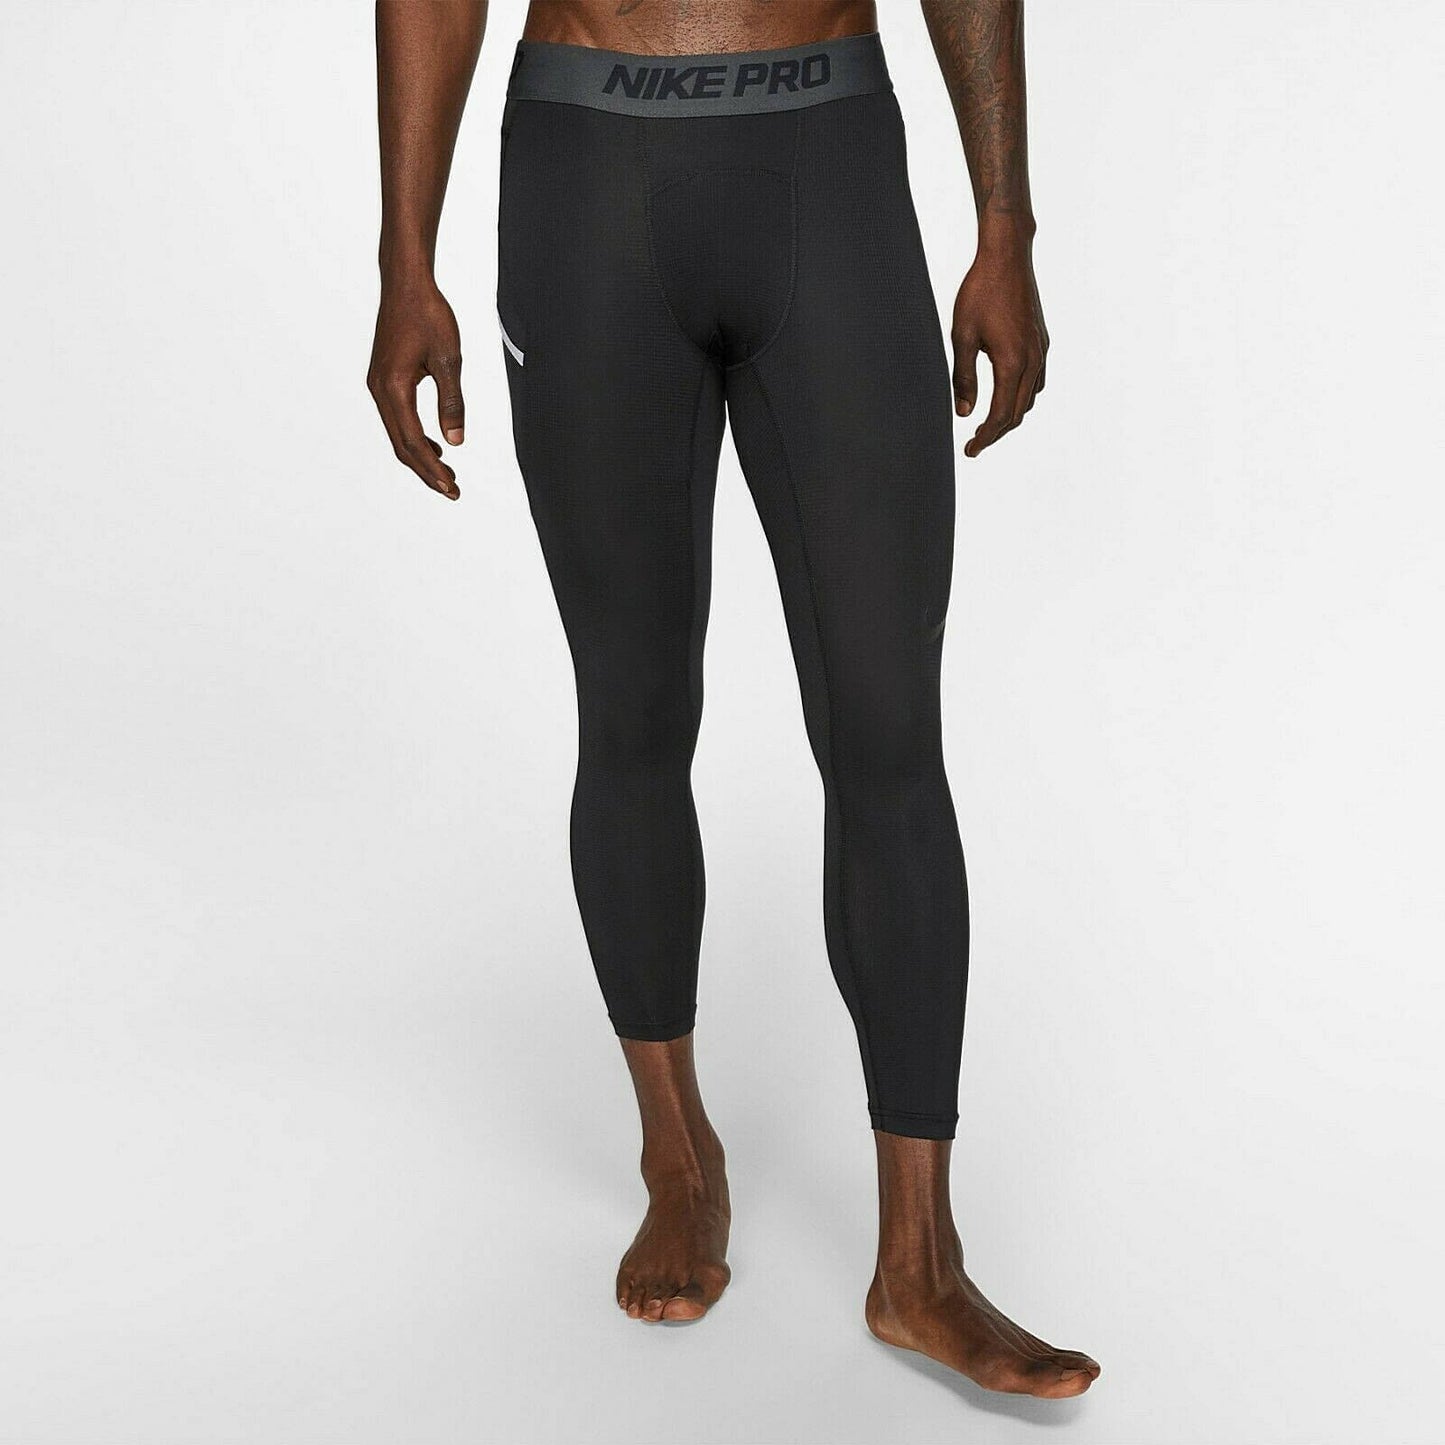 Nike Pro Men'S 3/4 Basketball Tights Black/Black